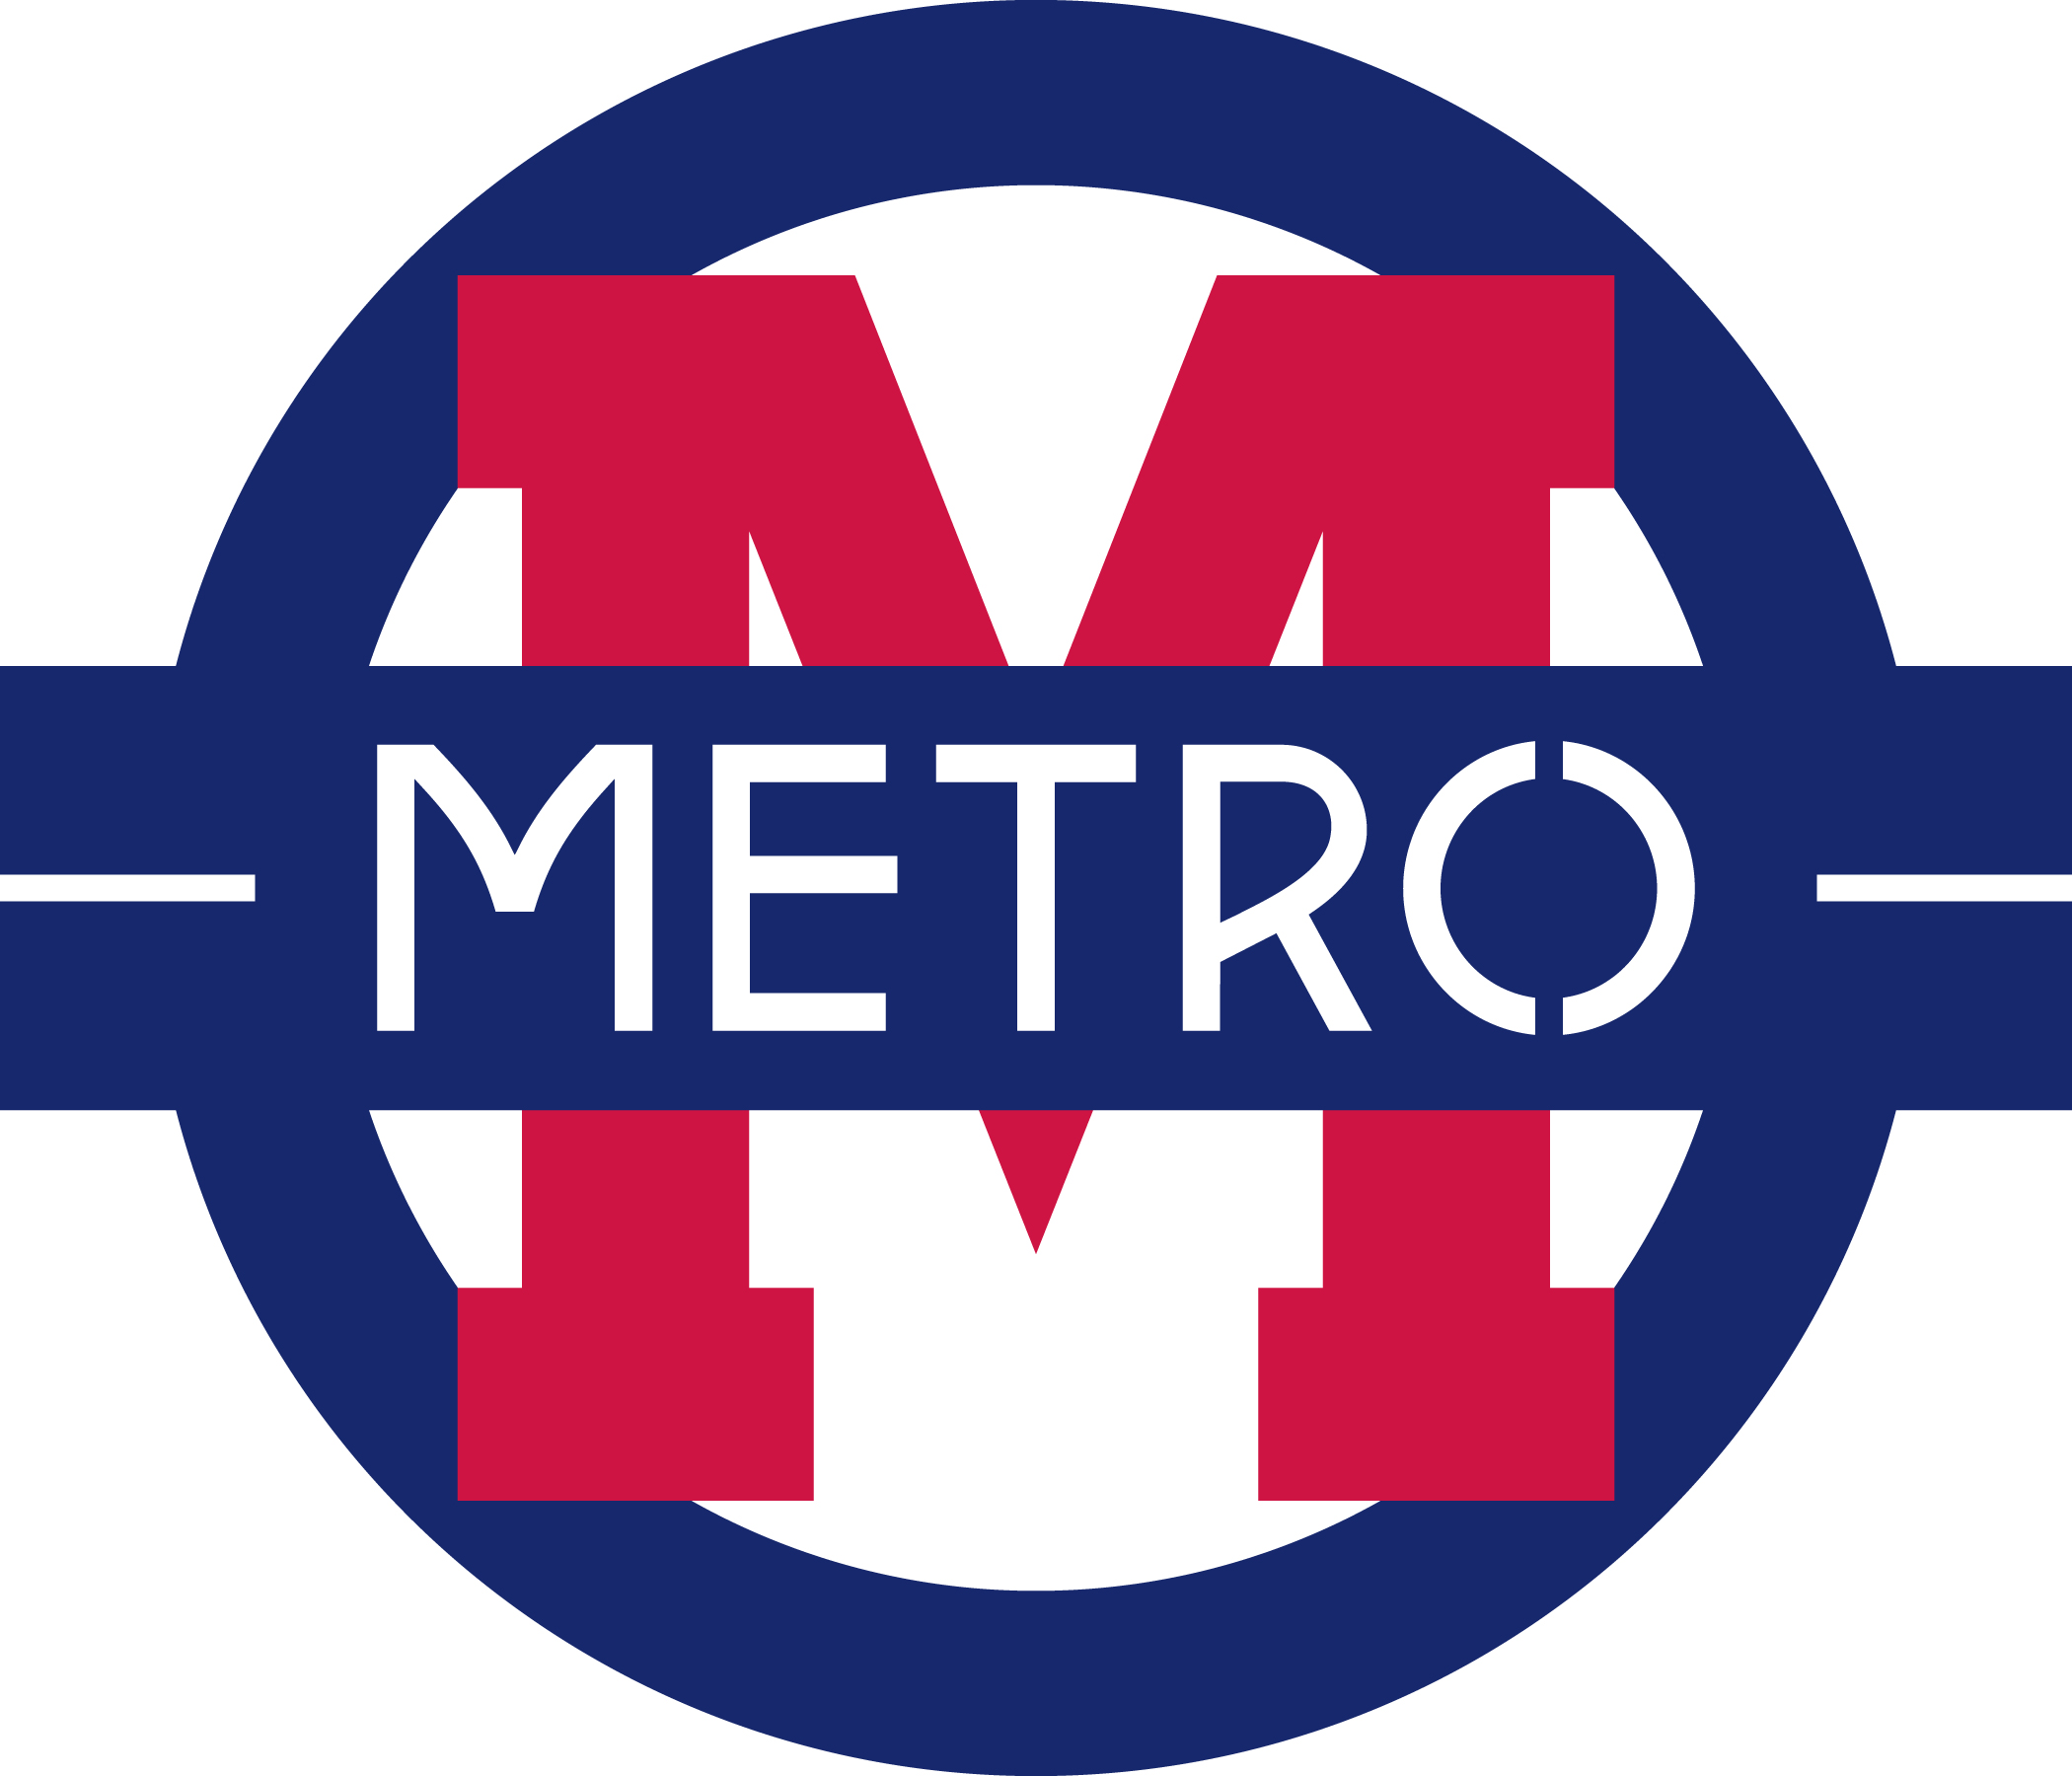 Metro Nightclub & Restaurant